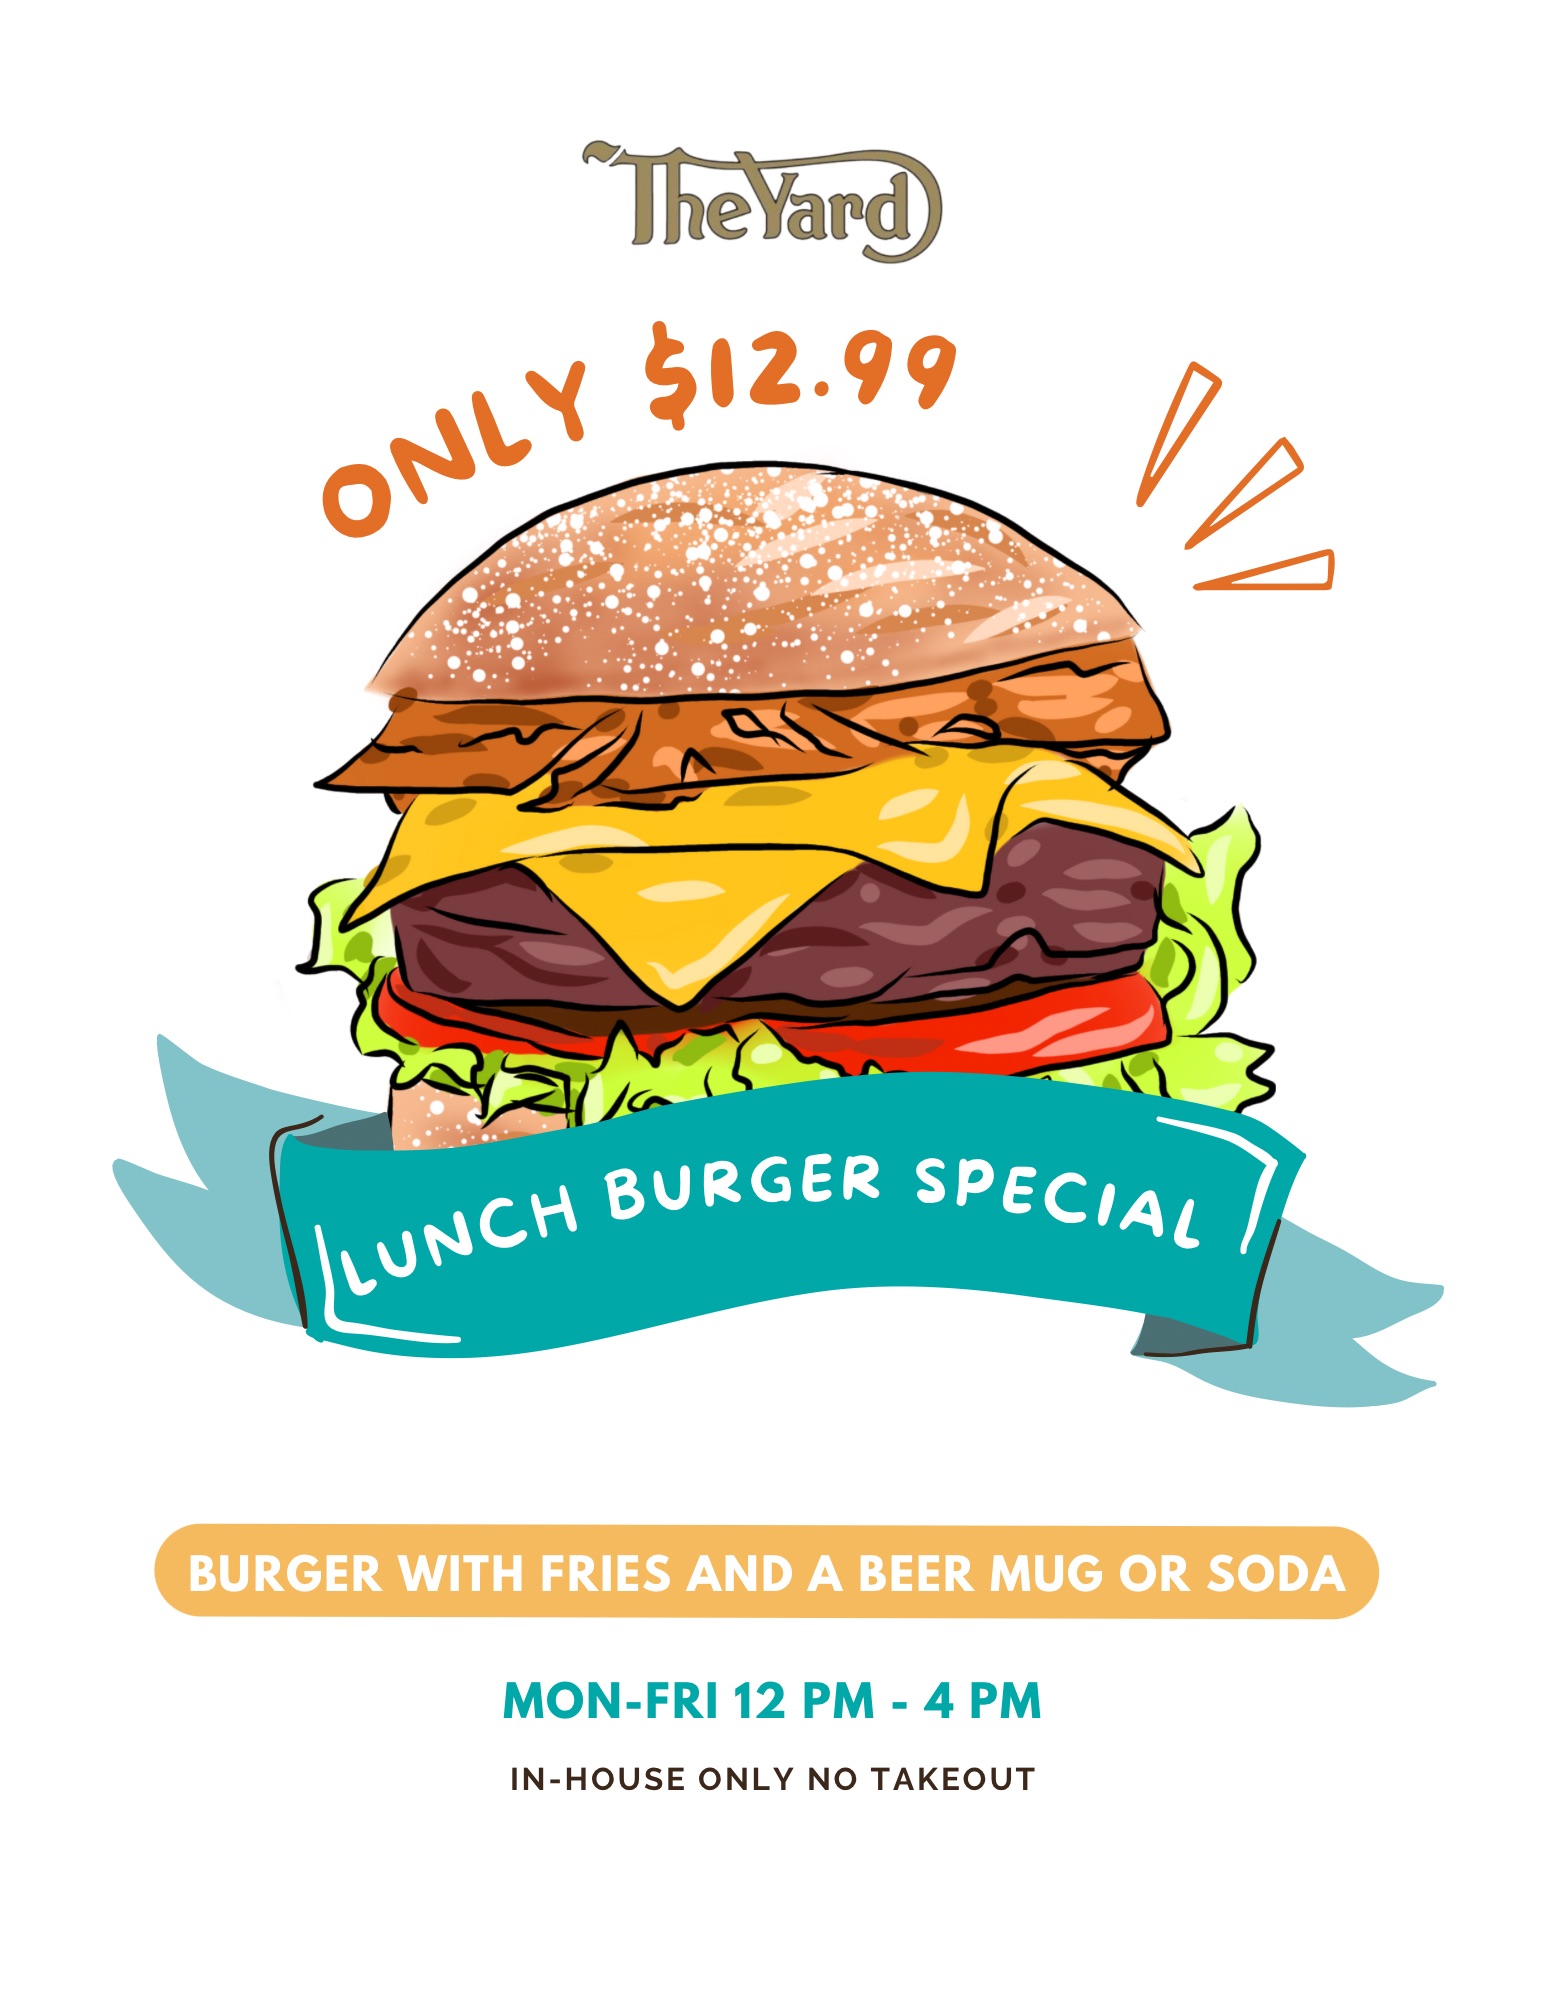 Lunch Specials - Burger and a mug - The yard haleden 